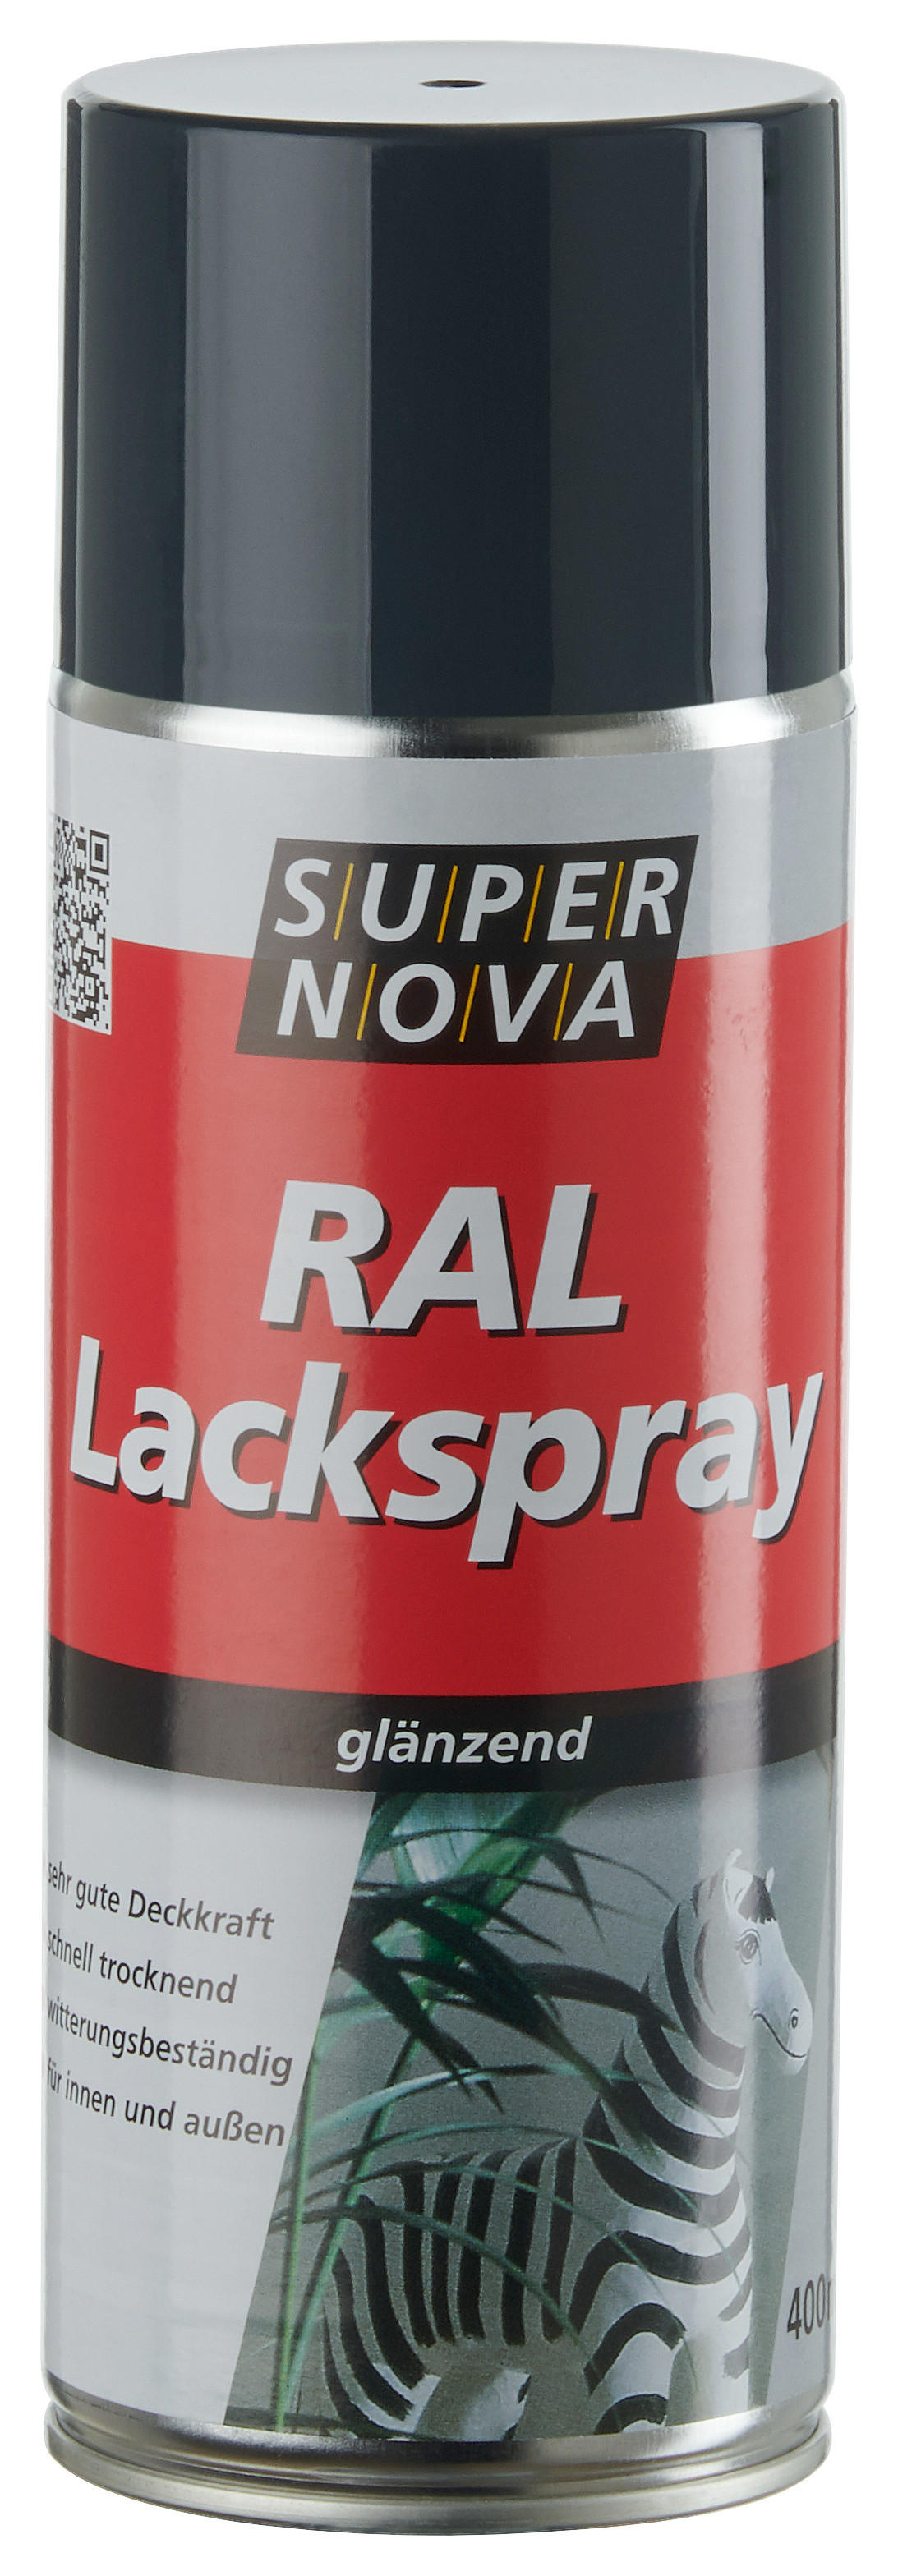 Super-Nova Lackspray anthrazit glänzend ca. 0,4 l Lackspray 400ml - anthrazit (400ml)